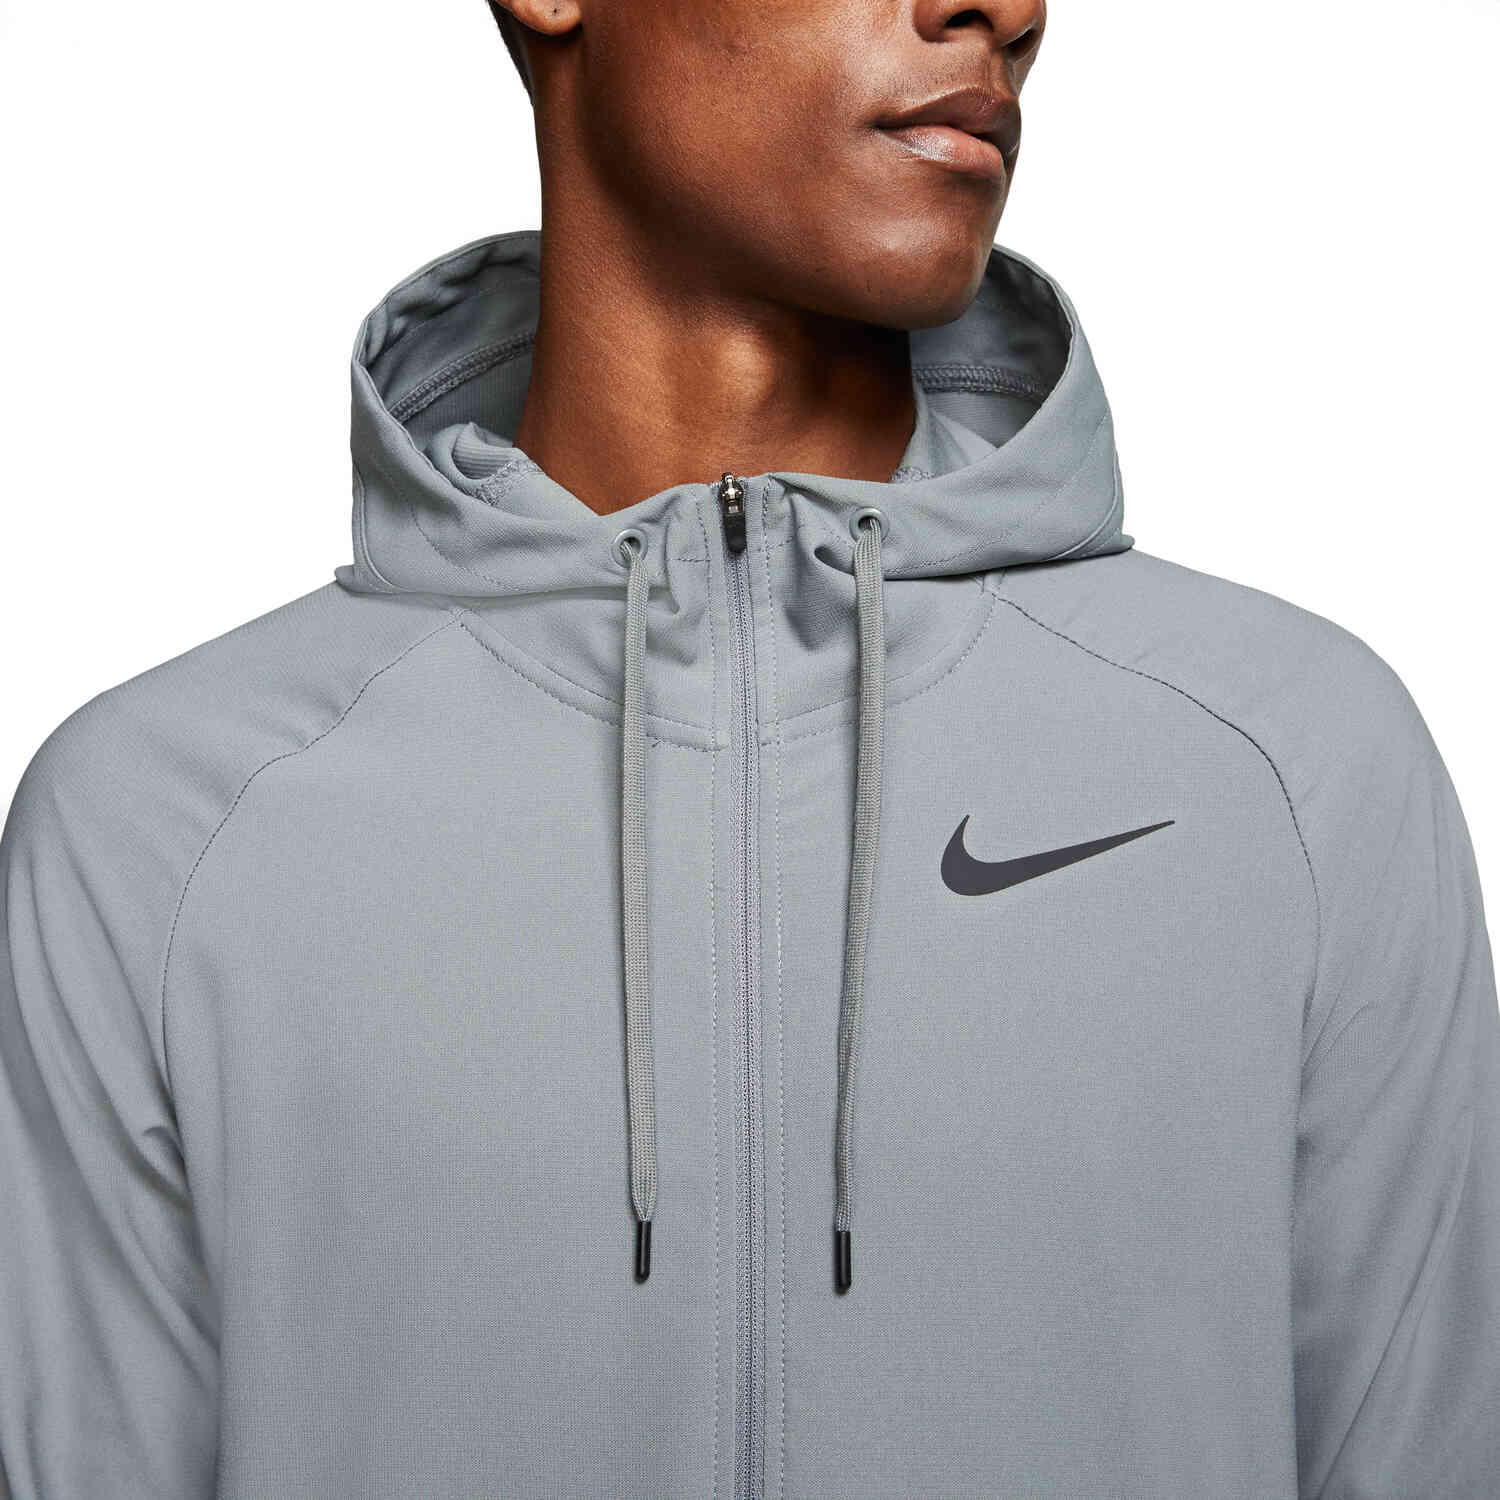 Oven Het beste spectrum Nike Pro Flex Vent Max Hooded Jacket - Smoke Grey/Black - SoccerPro